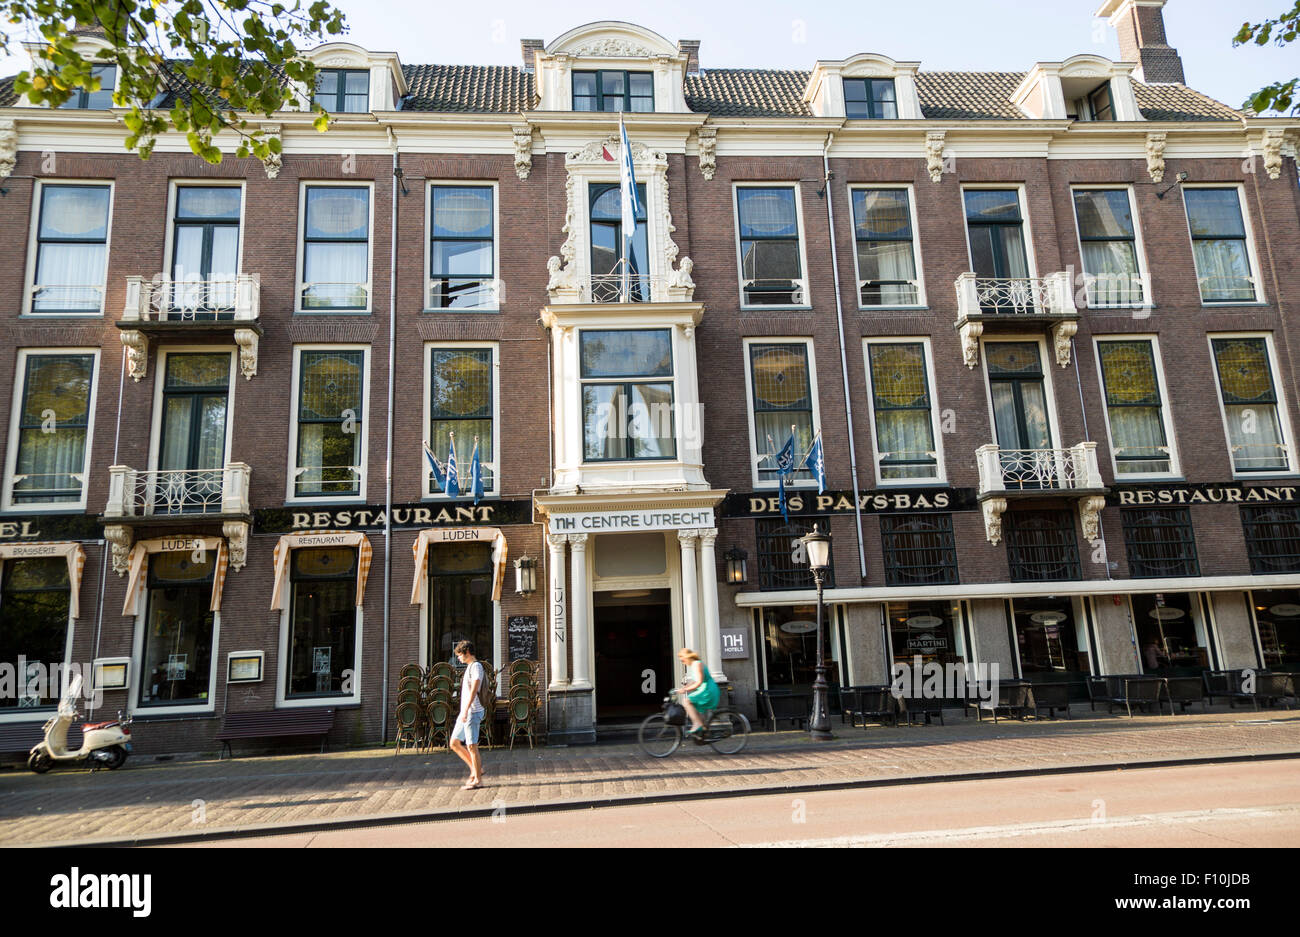 Des Pays-Bas Luden Center ristorante edificio, Utrecht, Paesi Bassi Foto Stock